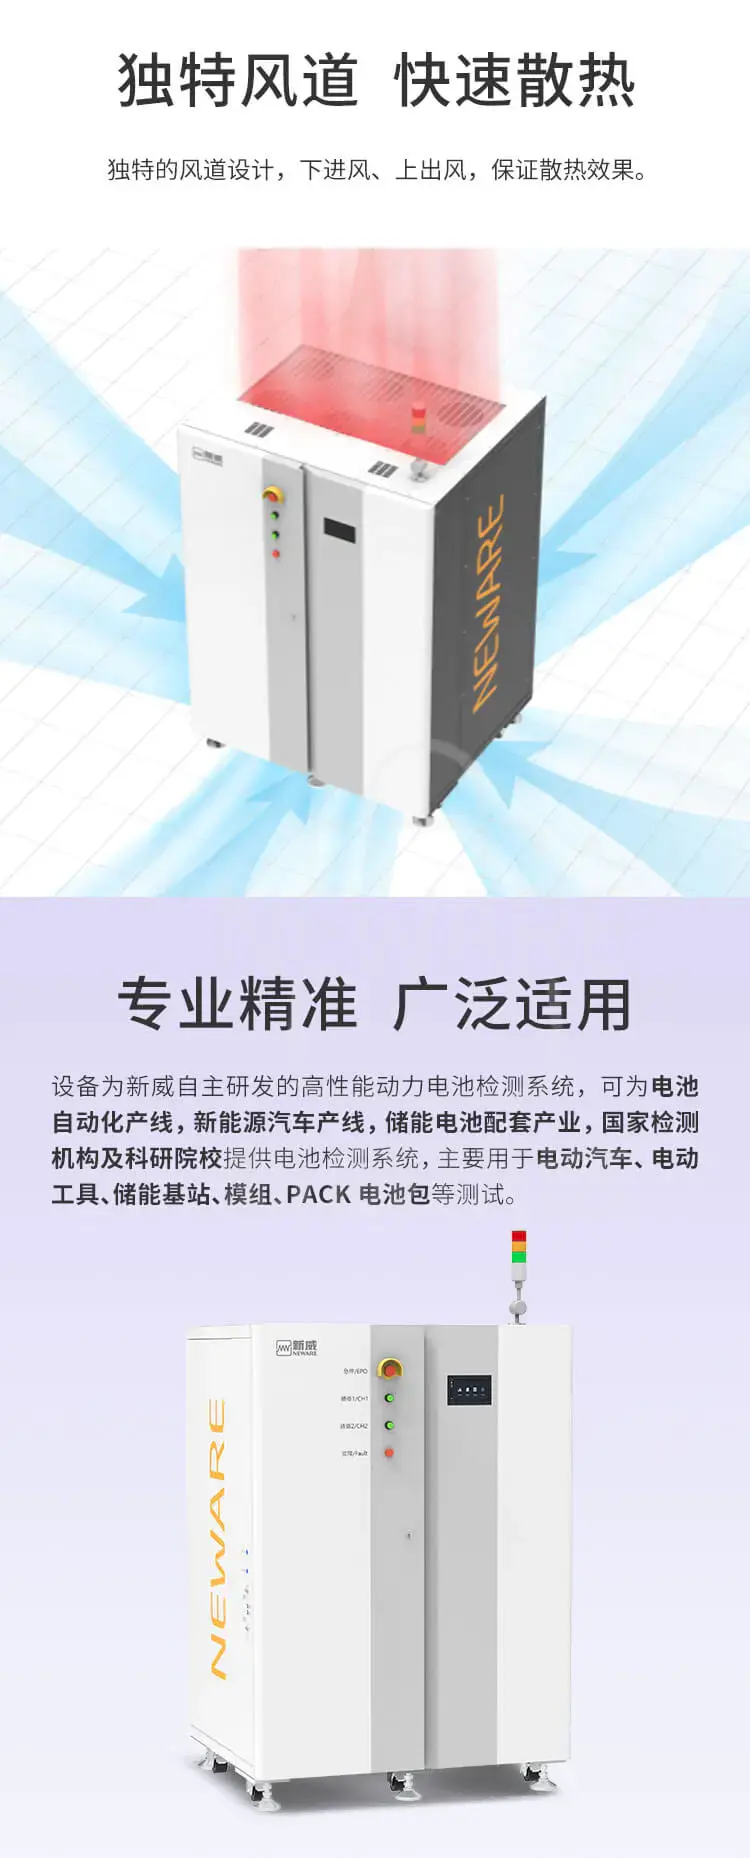 Pack检测系统解决方案 CE-6000 Tower系列塔式机商品介绍3